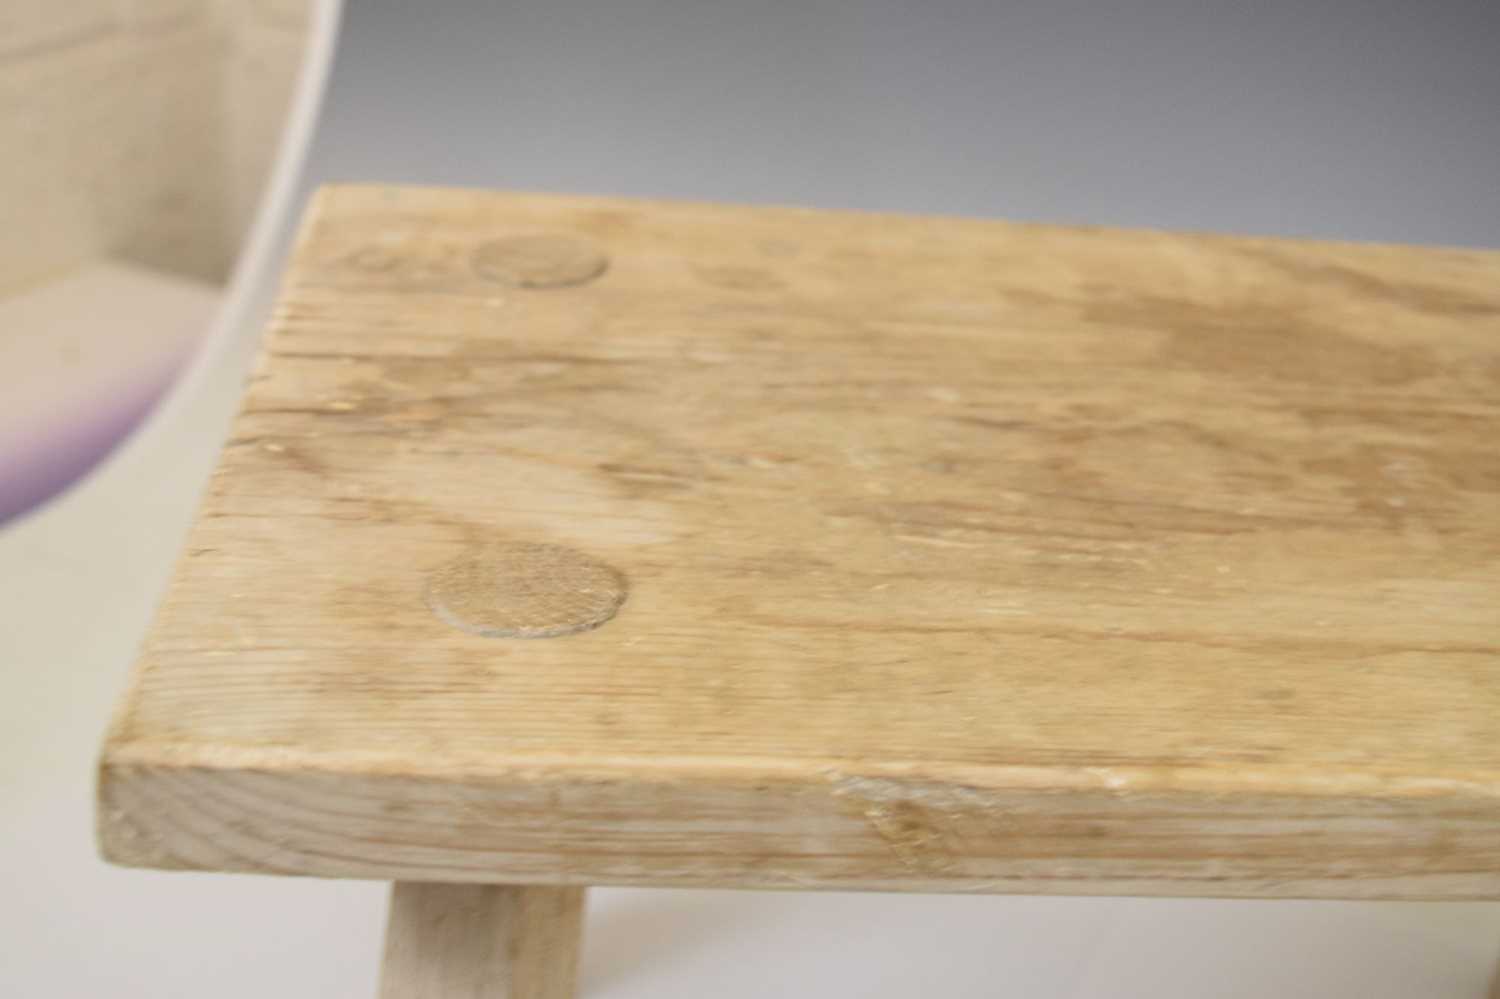 Rustic four-legged pine stool - Image 3 of 6